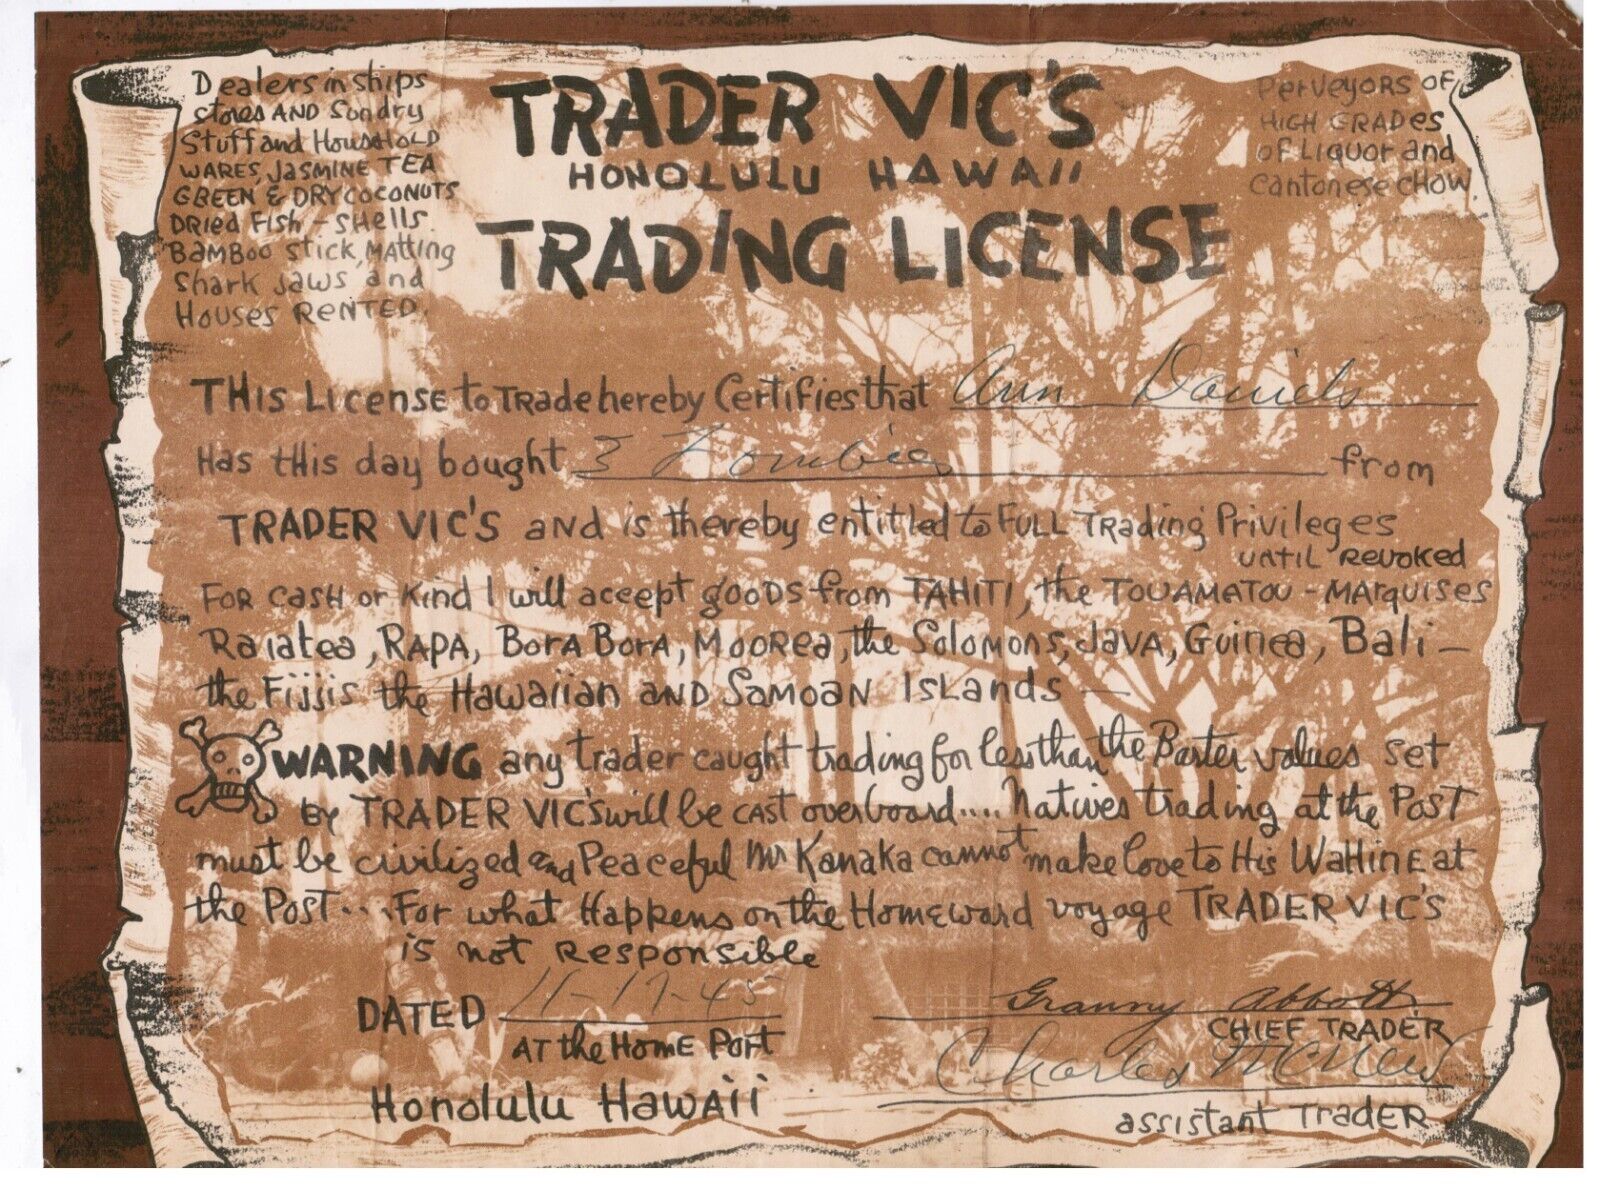 1945 TRADER VIC'S Trading License  Honolulu Hawaii